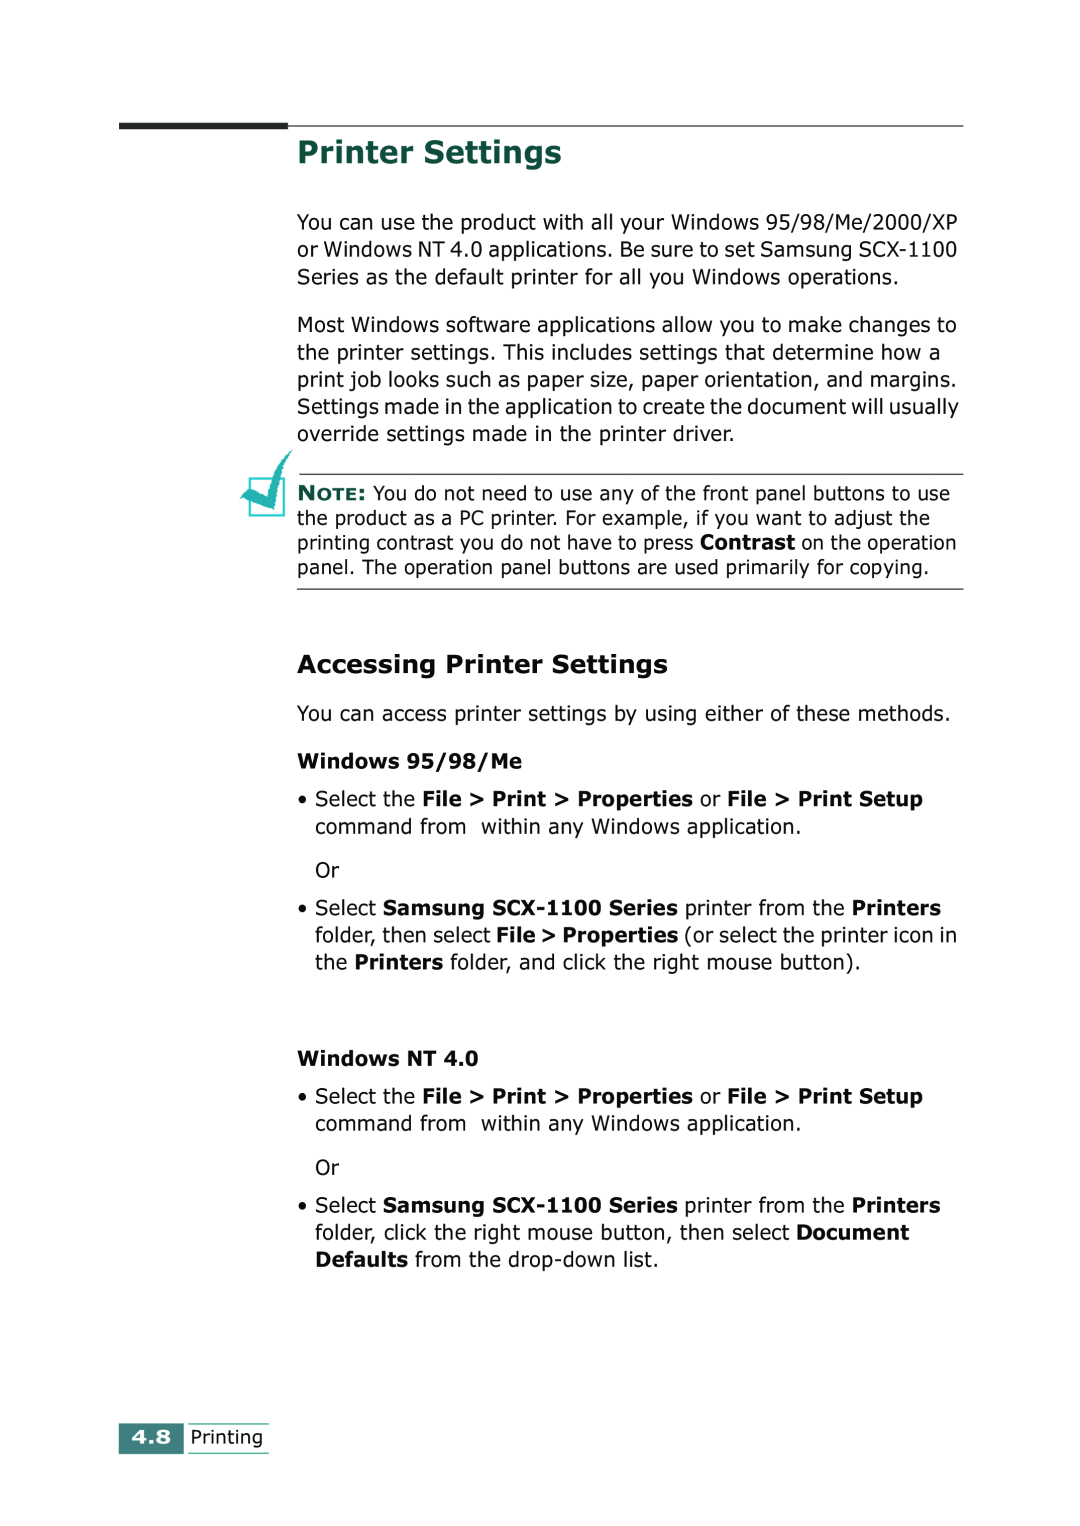 Samsung SCX-1100 manual Accessing Printer Settings, Windows 95/98/Me, Windows NT 